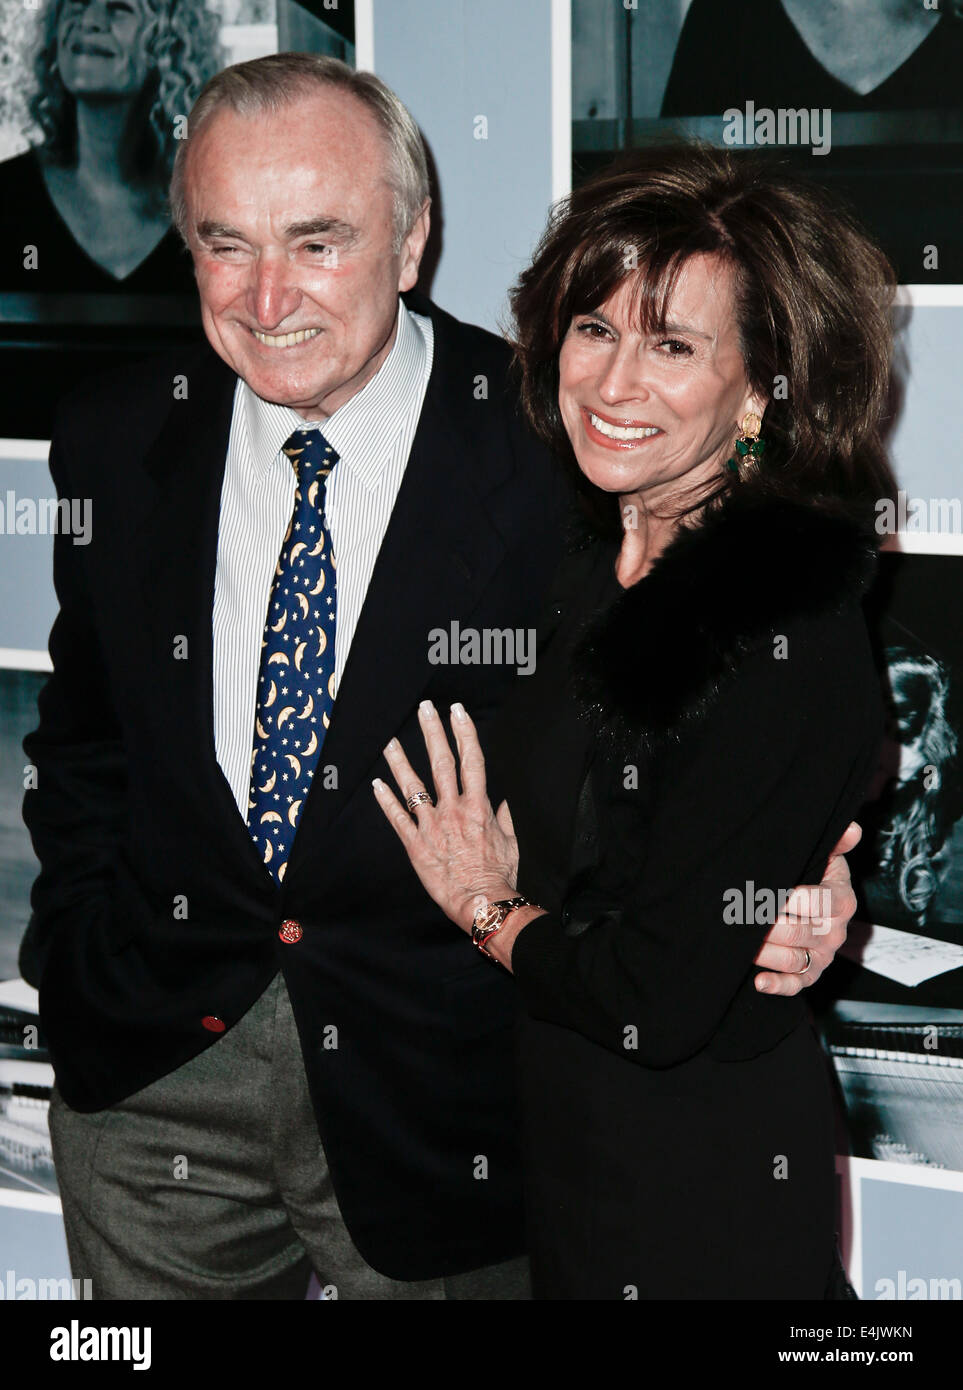 William Bratton (L) and wife Rikki Klieman attend 'Beautiful - The Carole King Musical' Broadway Opening Night. Stock Photo